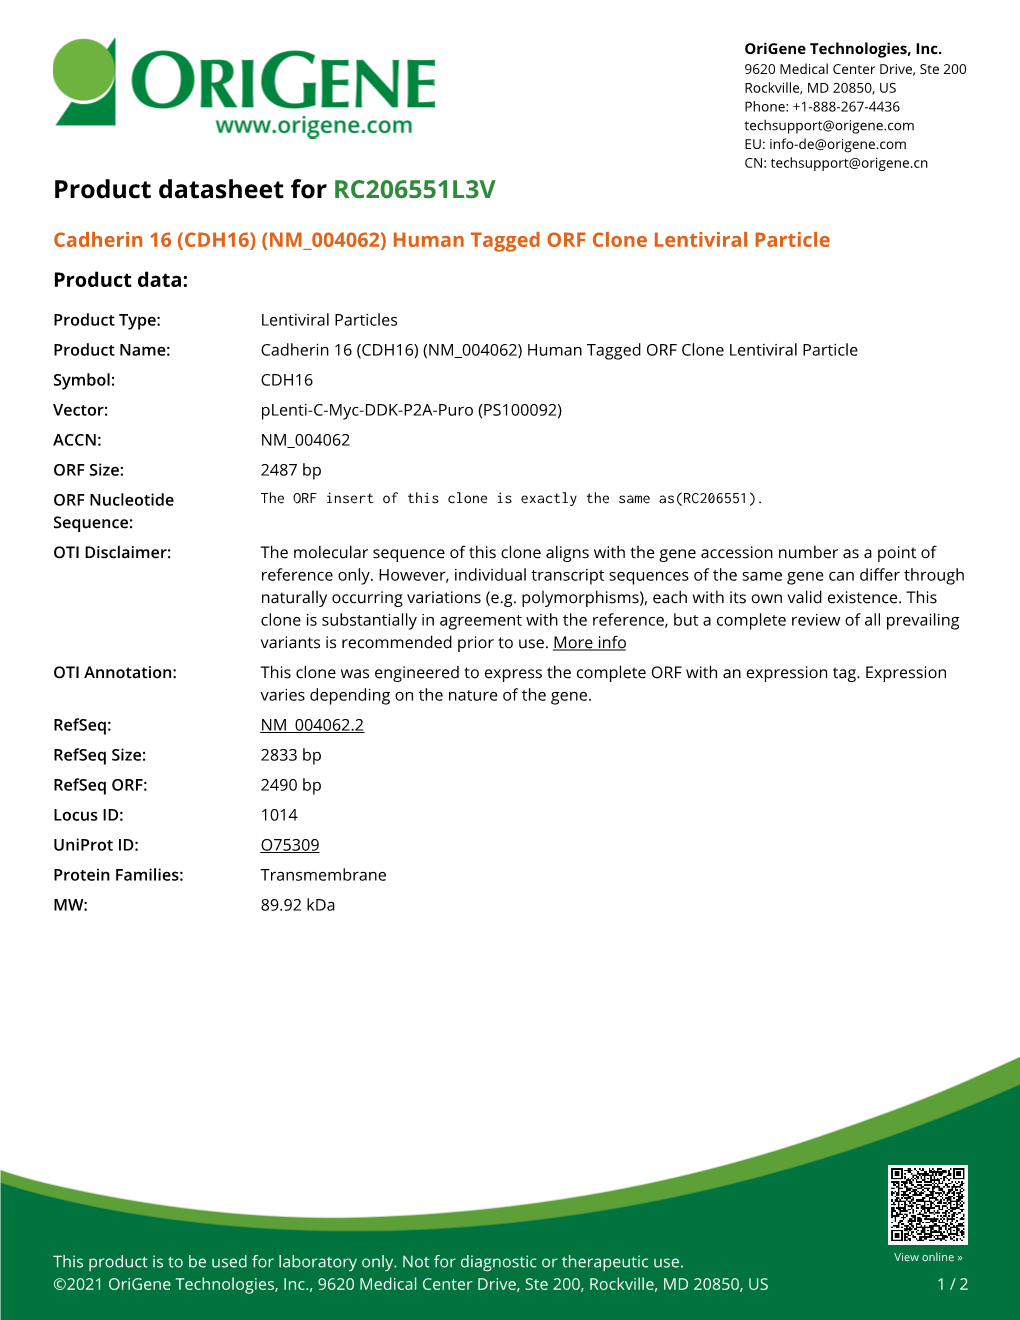 Cadherin 16 (CDH16) (NM 004062) Human Tagged ORF Clone Lentiviral Particle Product Data